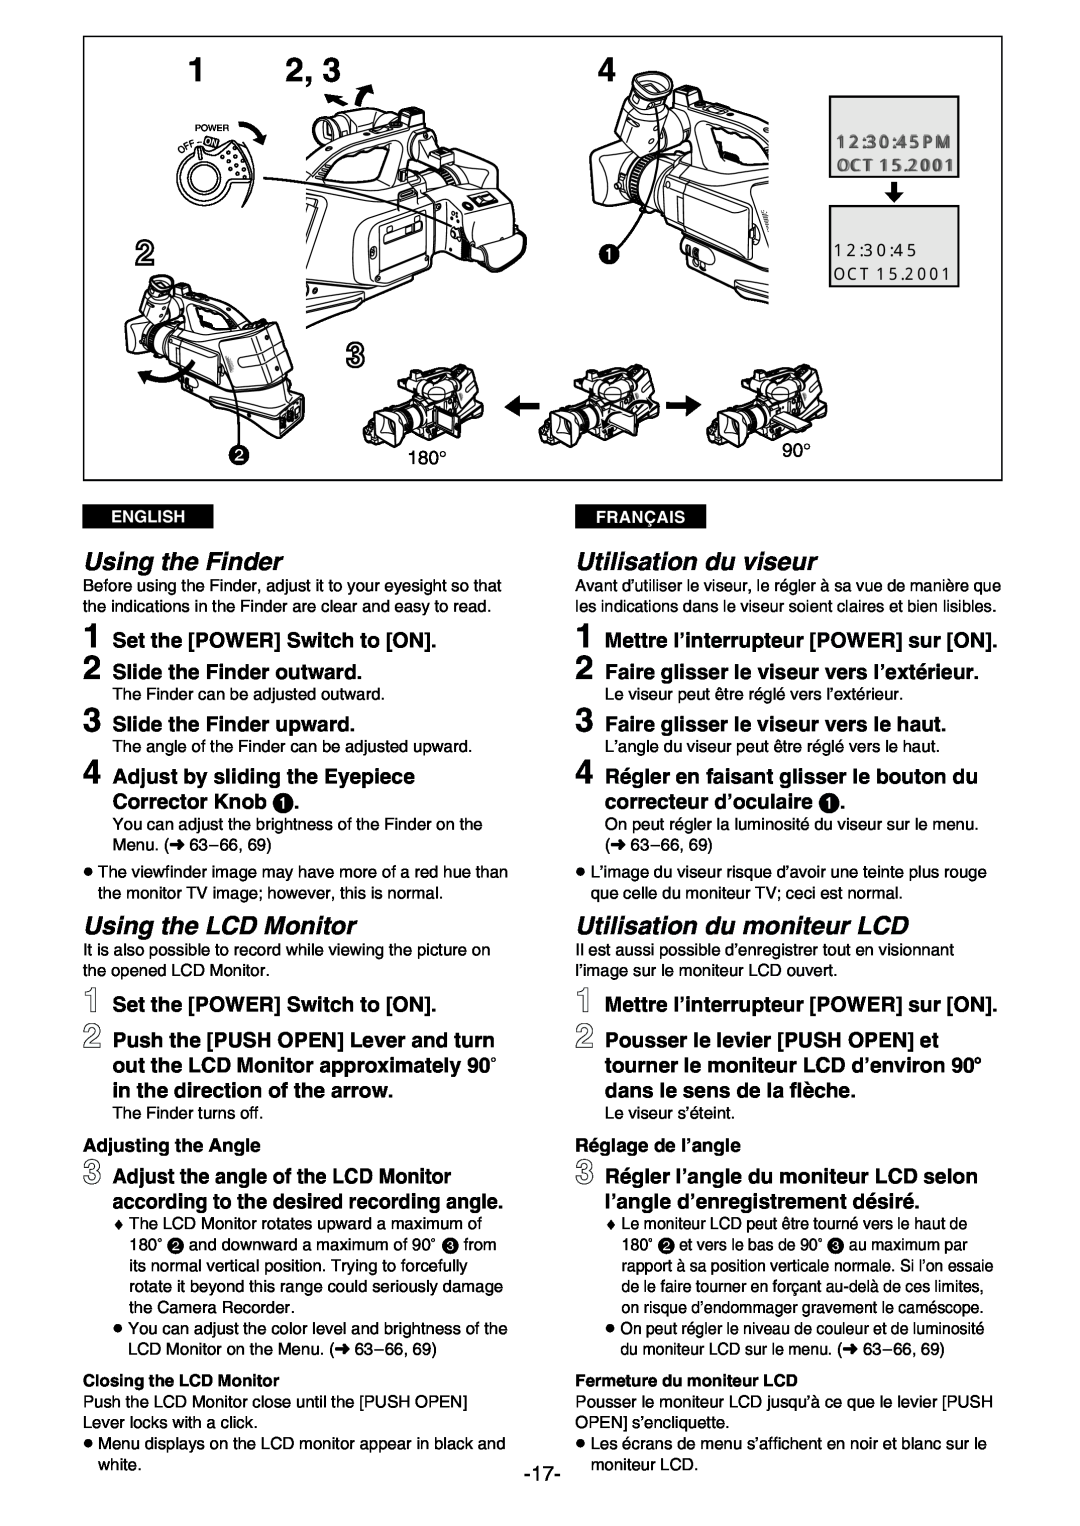 Panasonic AG- DVC 15P manual 123045PM, OCT 15, English, Français, Power 